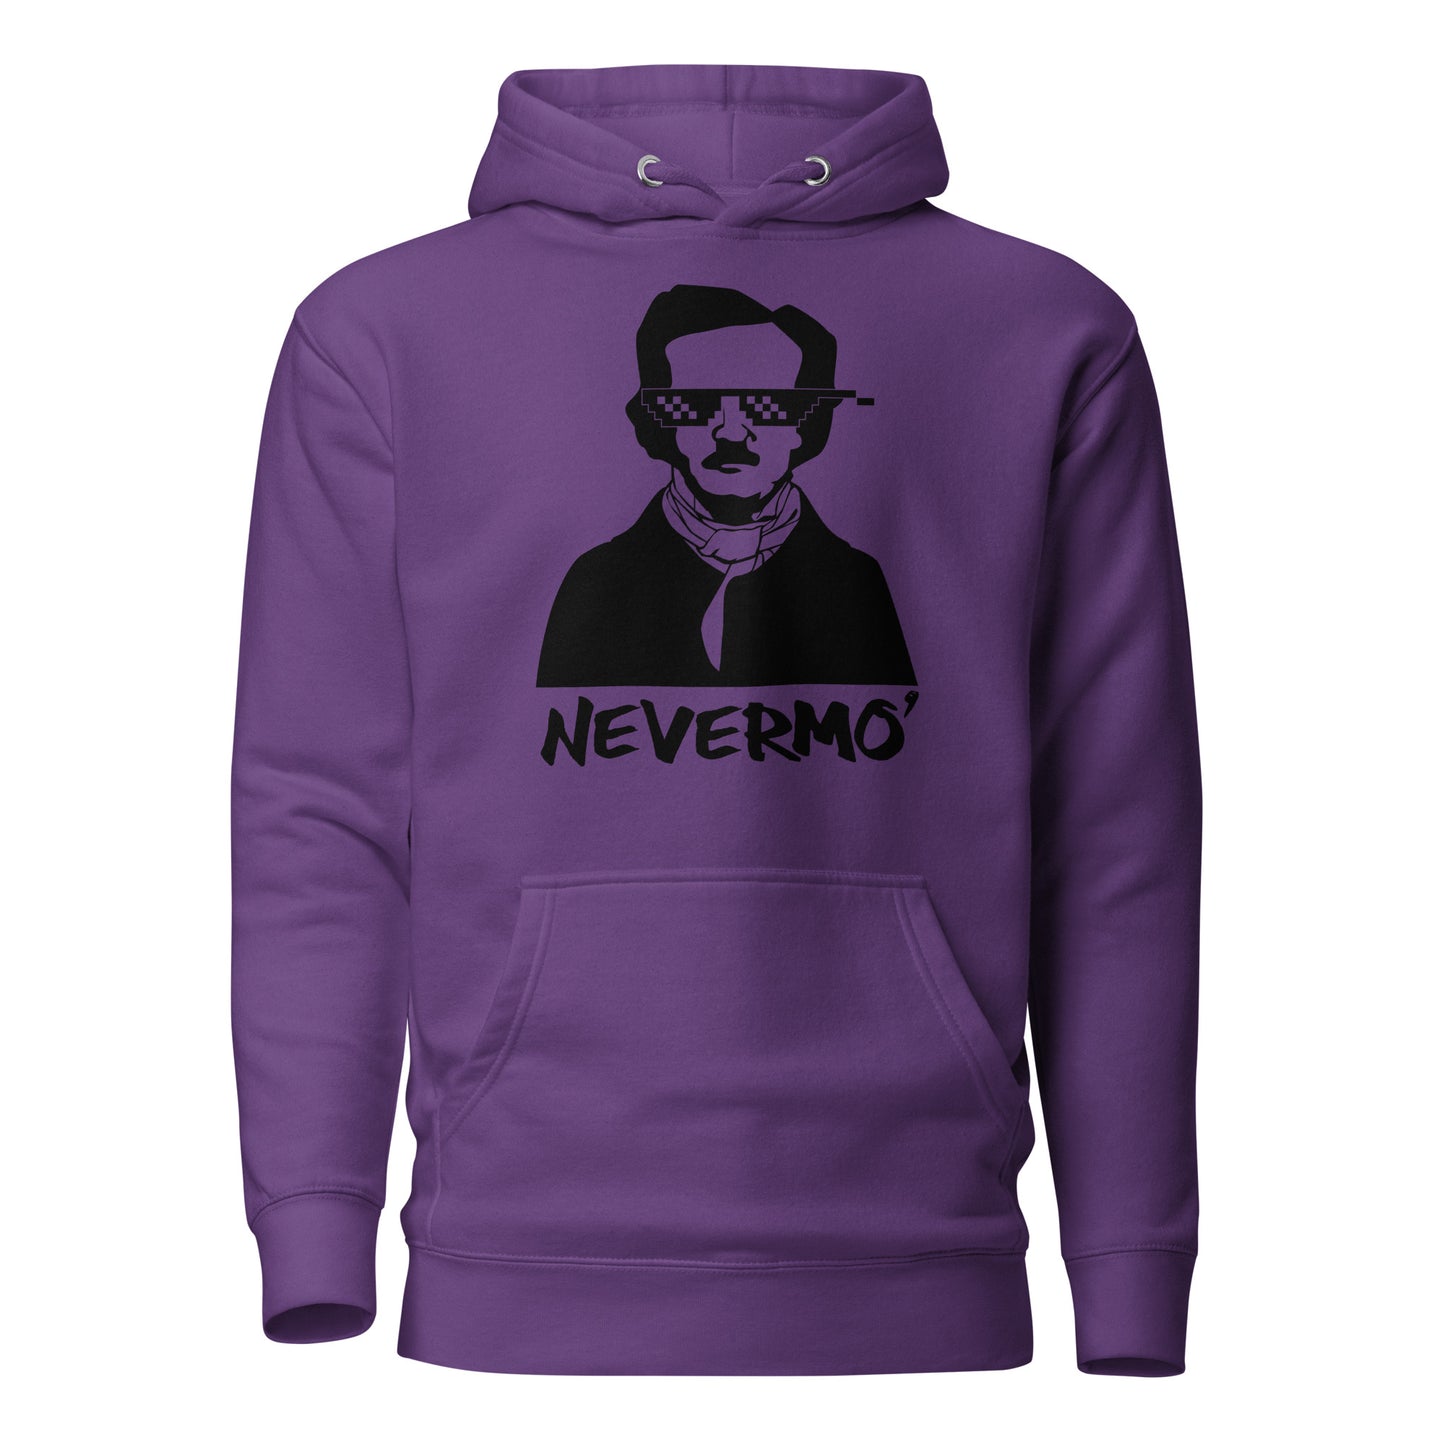 Men's Edgar Allan Poe "Nevermo" Hoodie - Purple Front